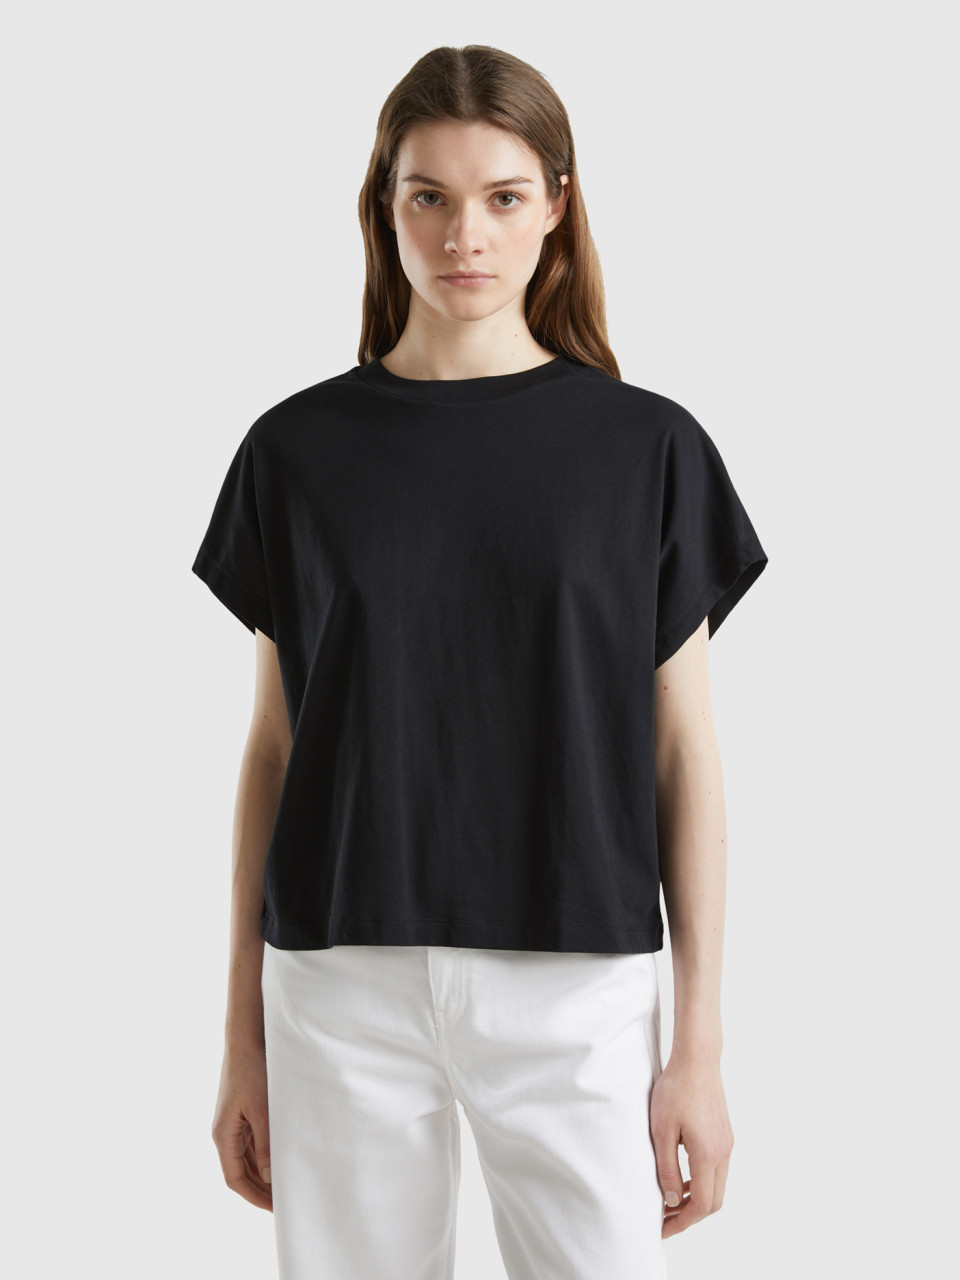 Benetton, Kimono Sleeve T-shirt, Black, Women